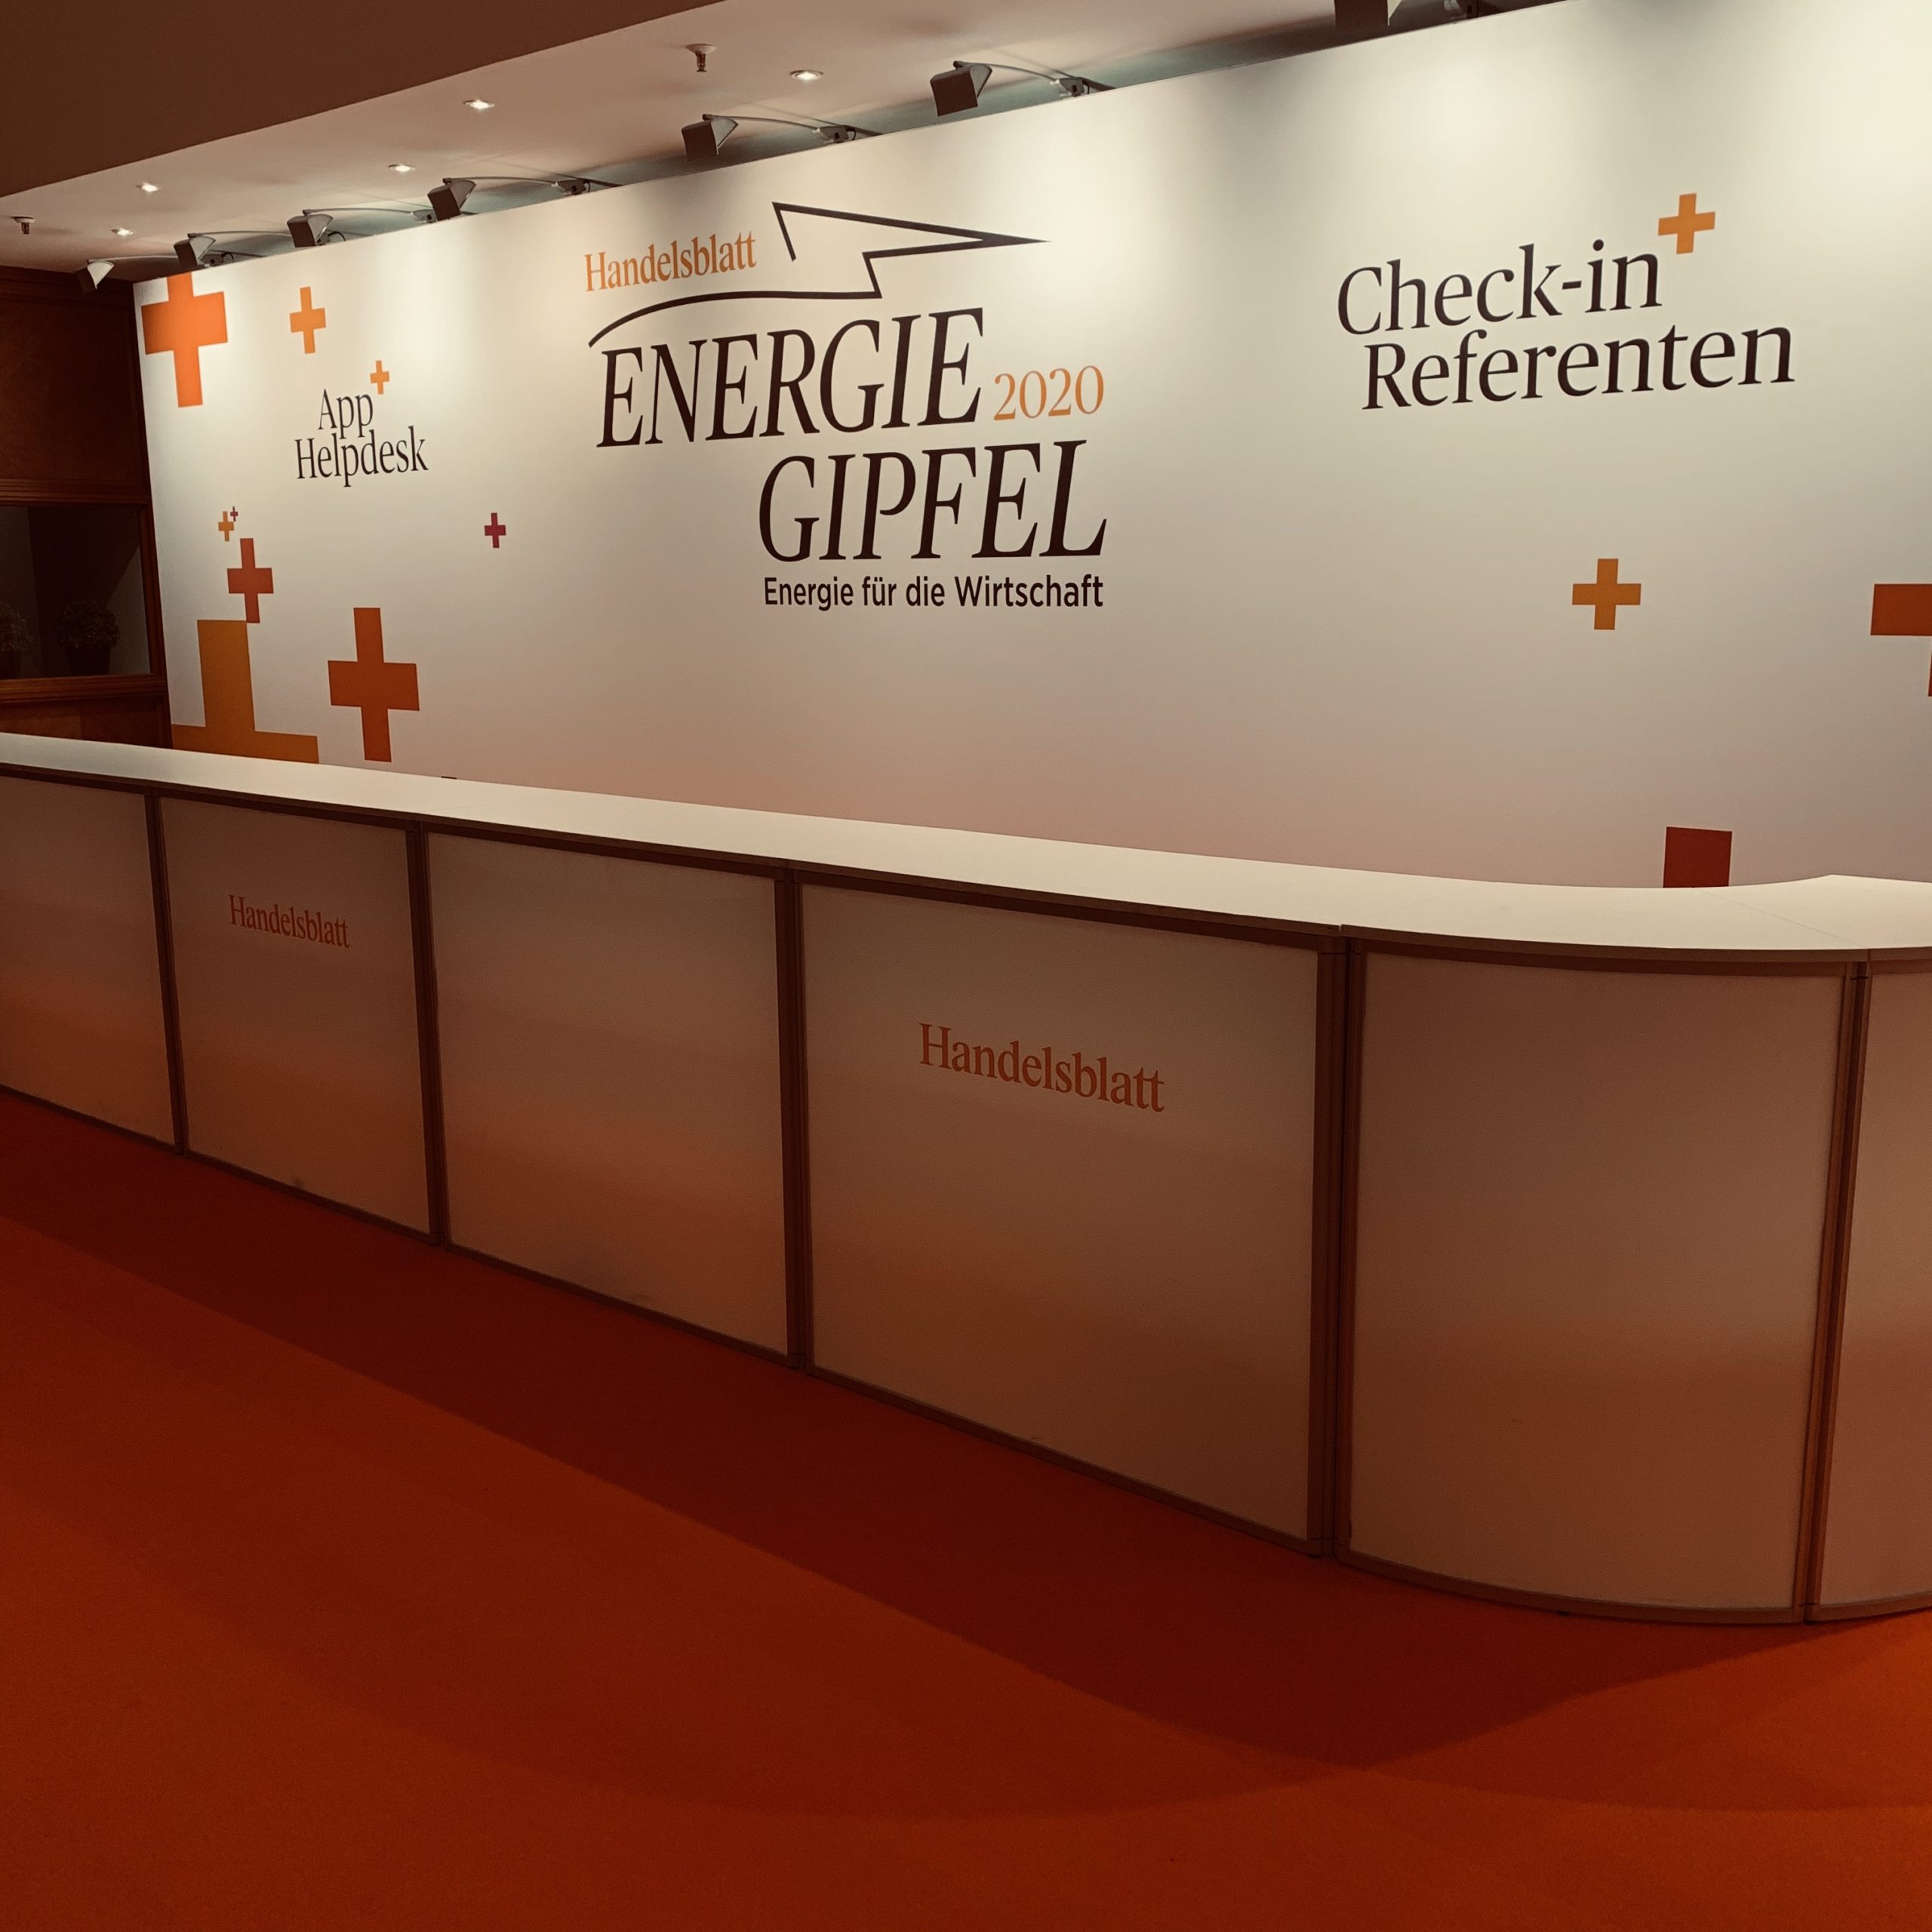 Foto vom Energie Gipfel-Handelsblatt 2020 im Intercontinental Berlin Material Rips Teppich